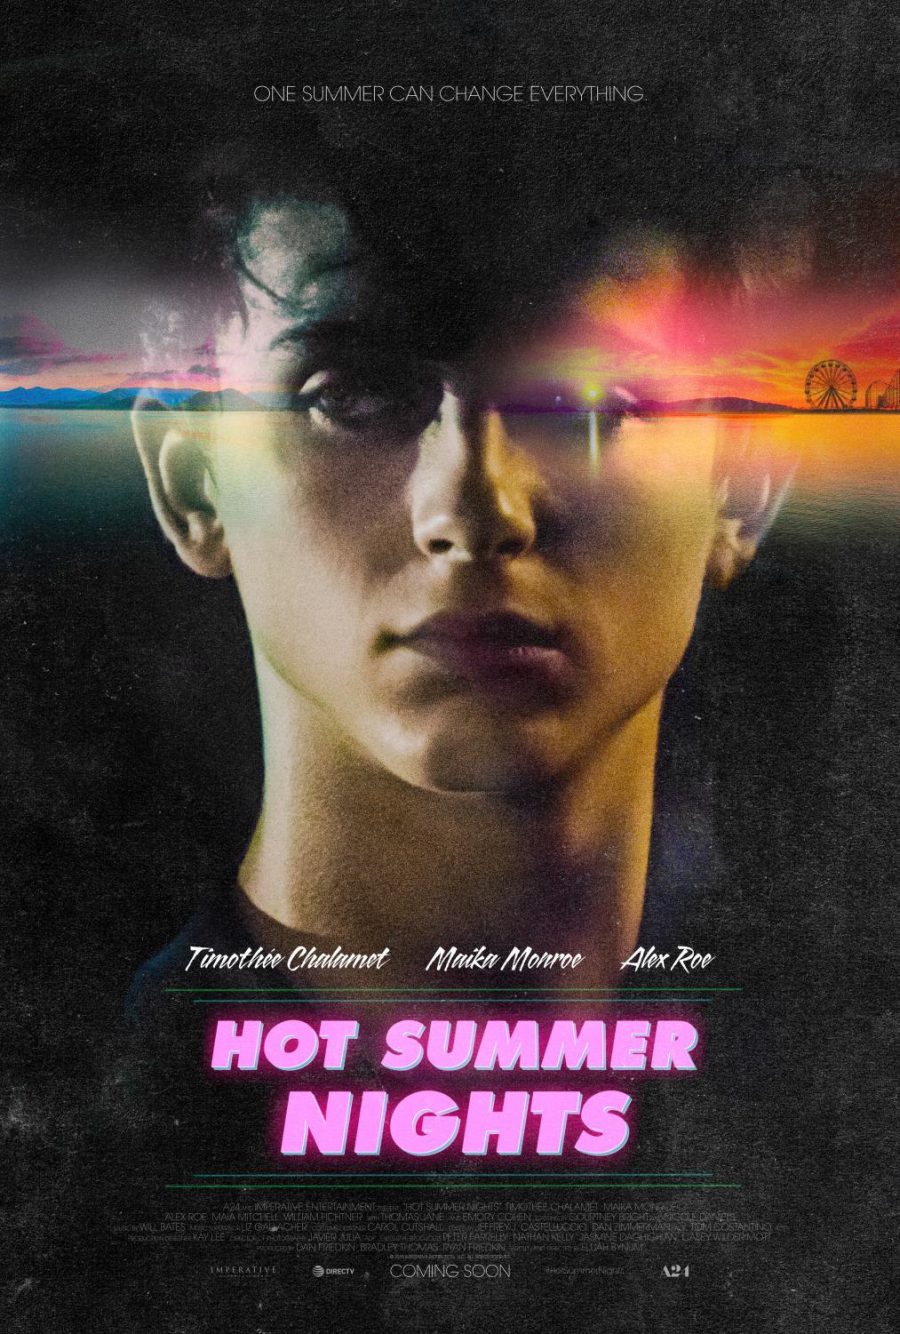 Hot Summer Nights surprises fans with dark ending – the Southerner Online